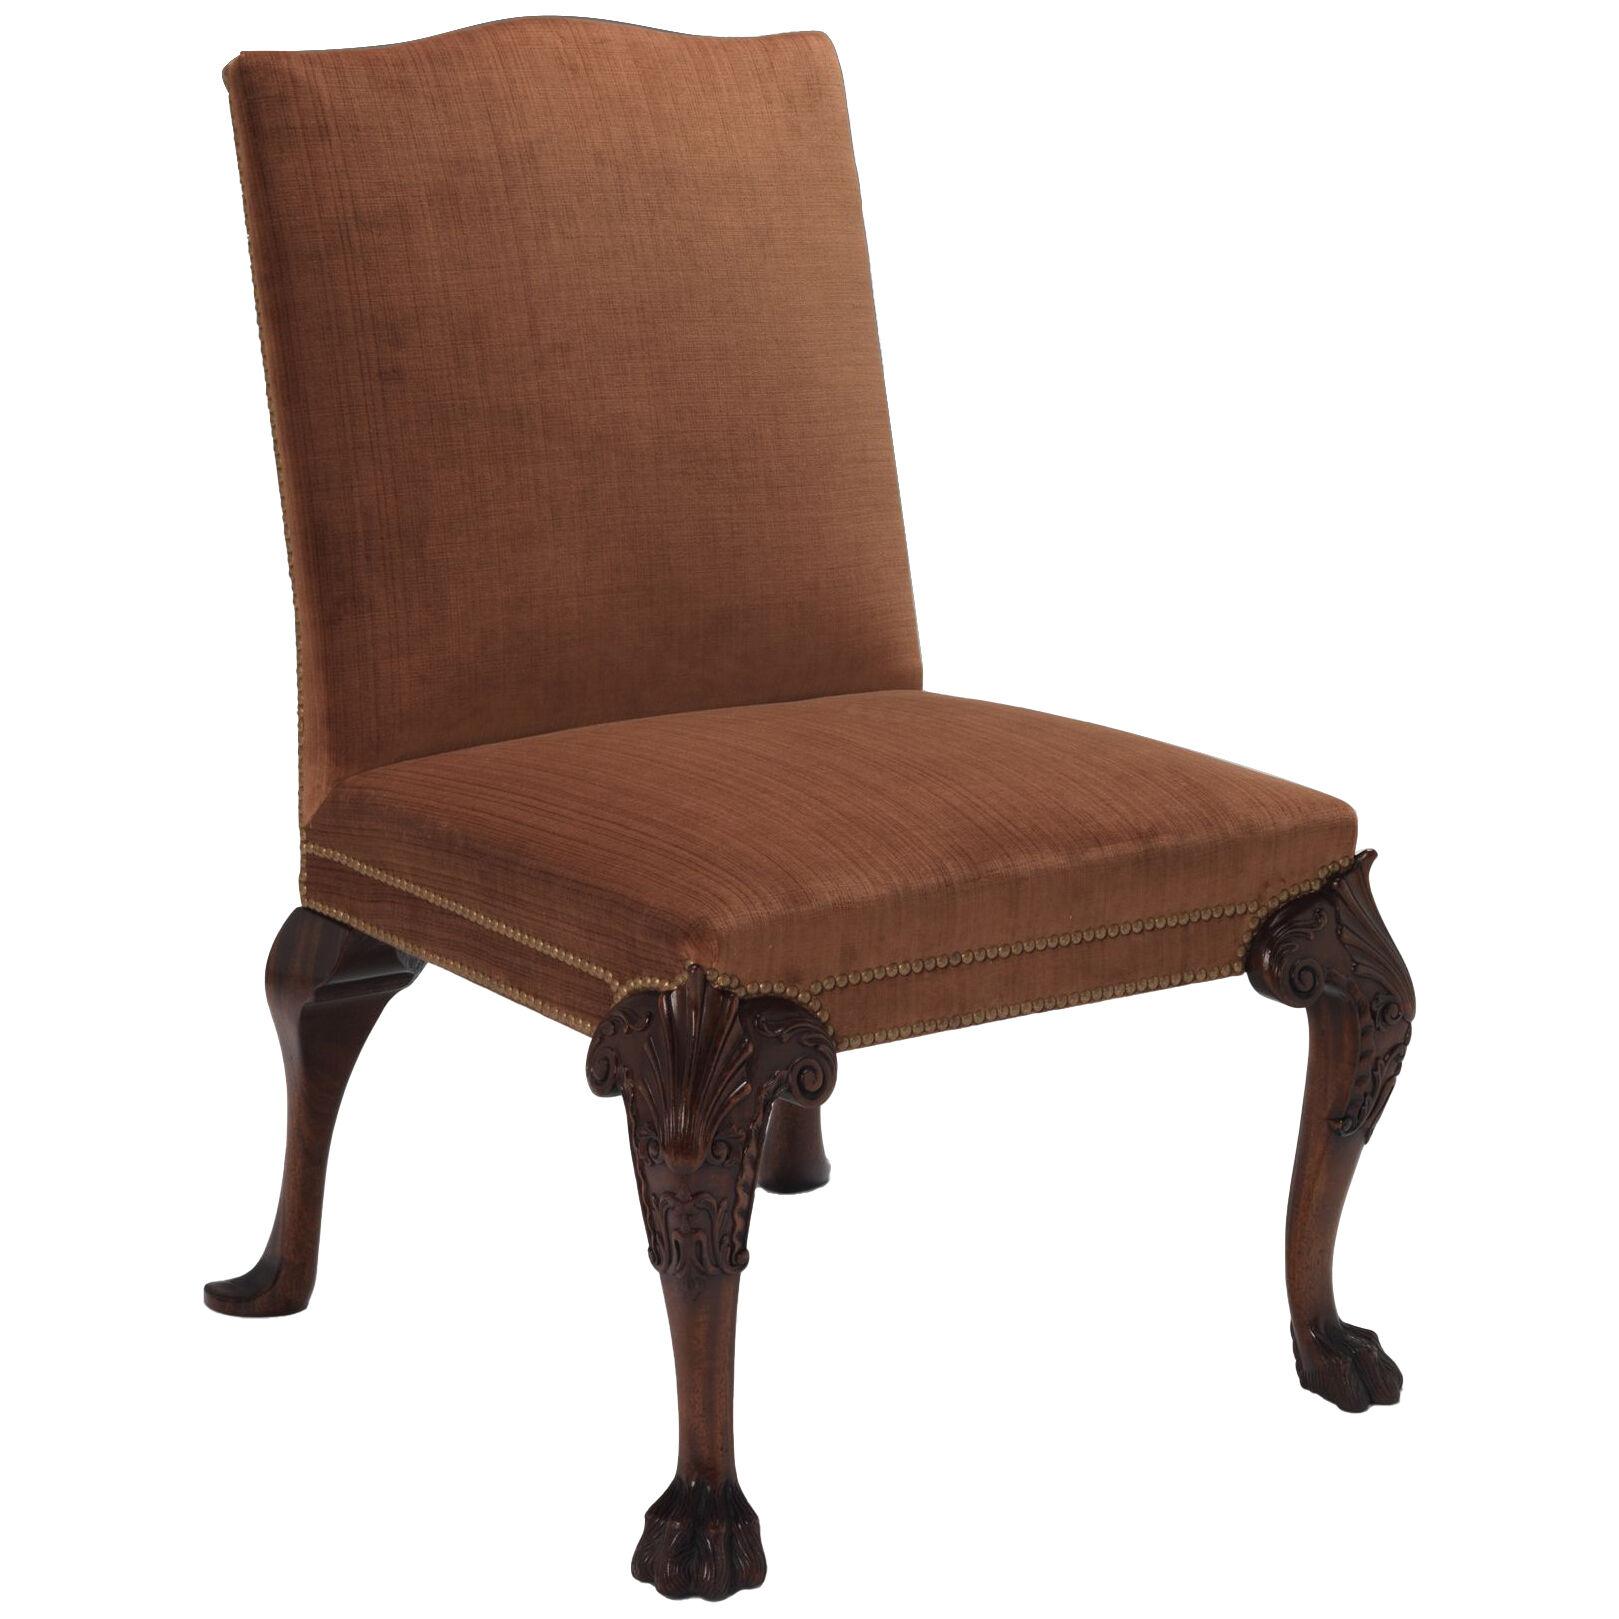 George II Banquet Chair